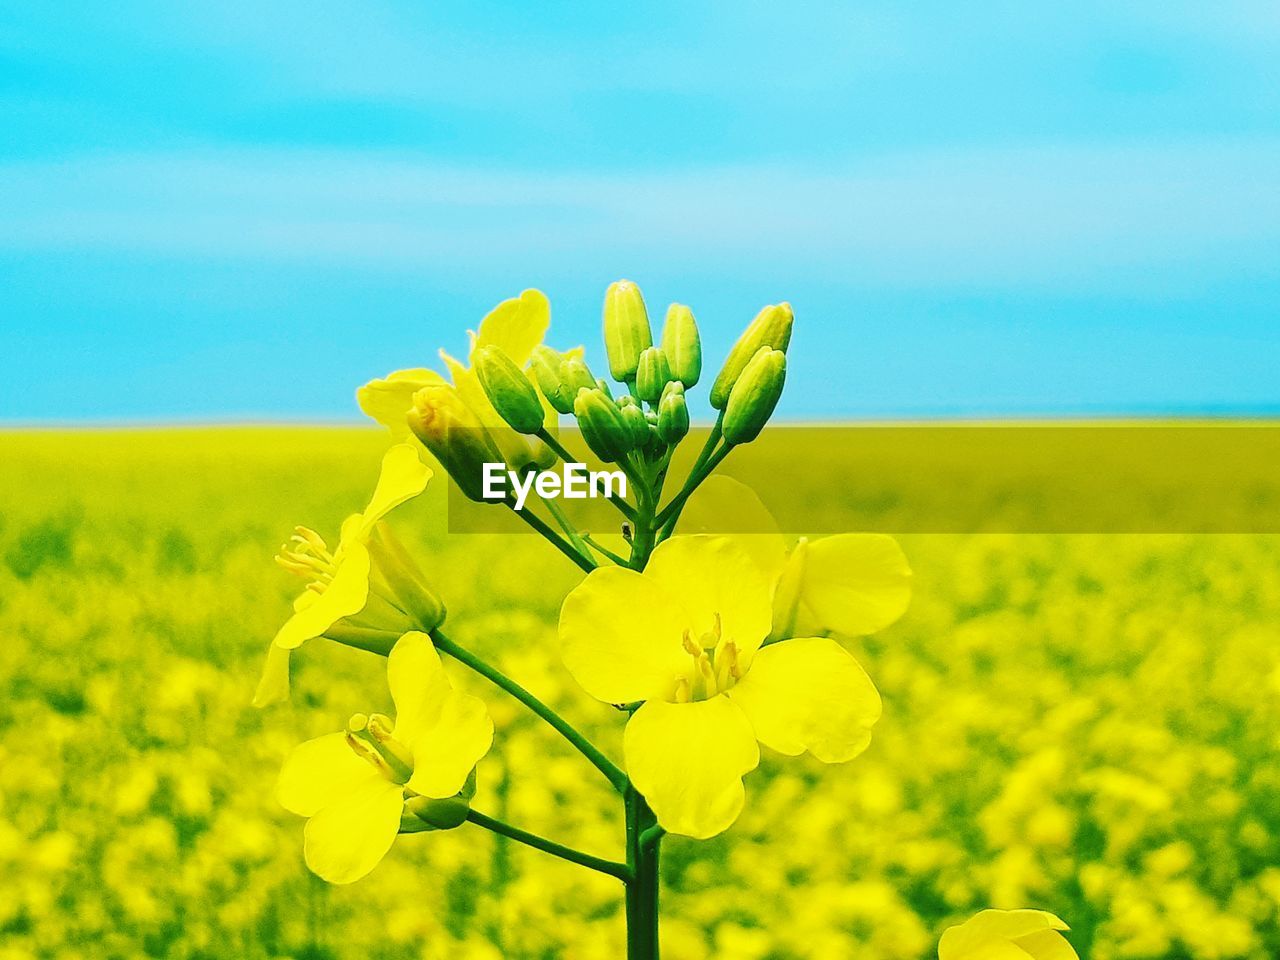 Yellow flowering plant in field